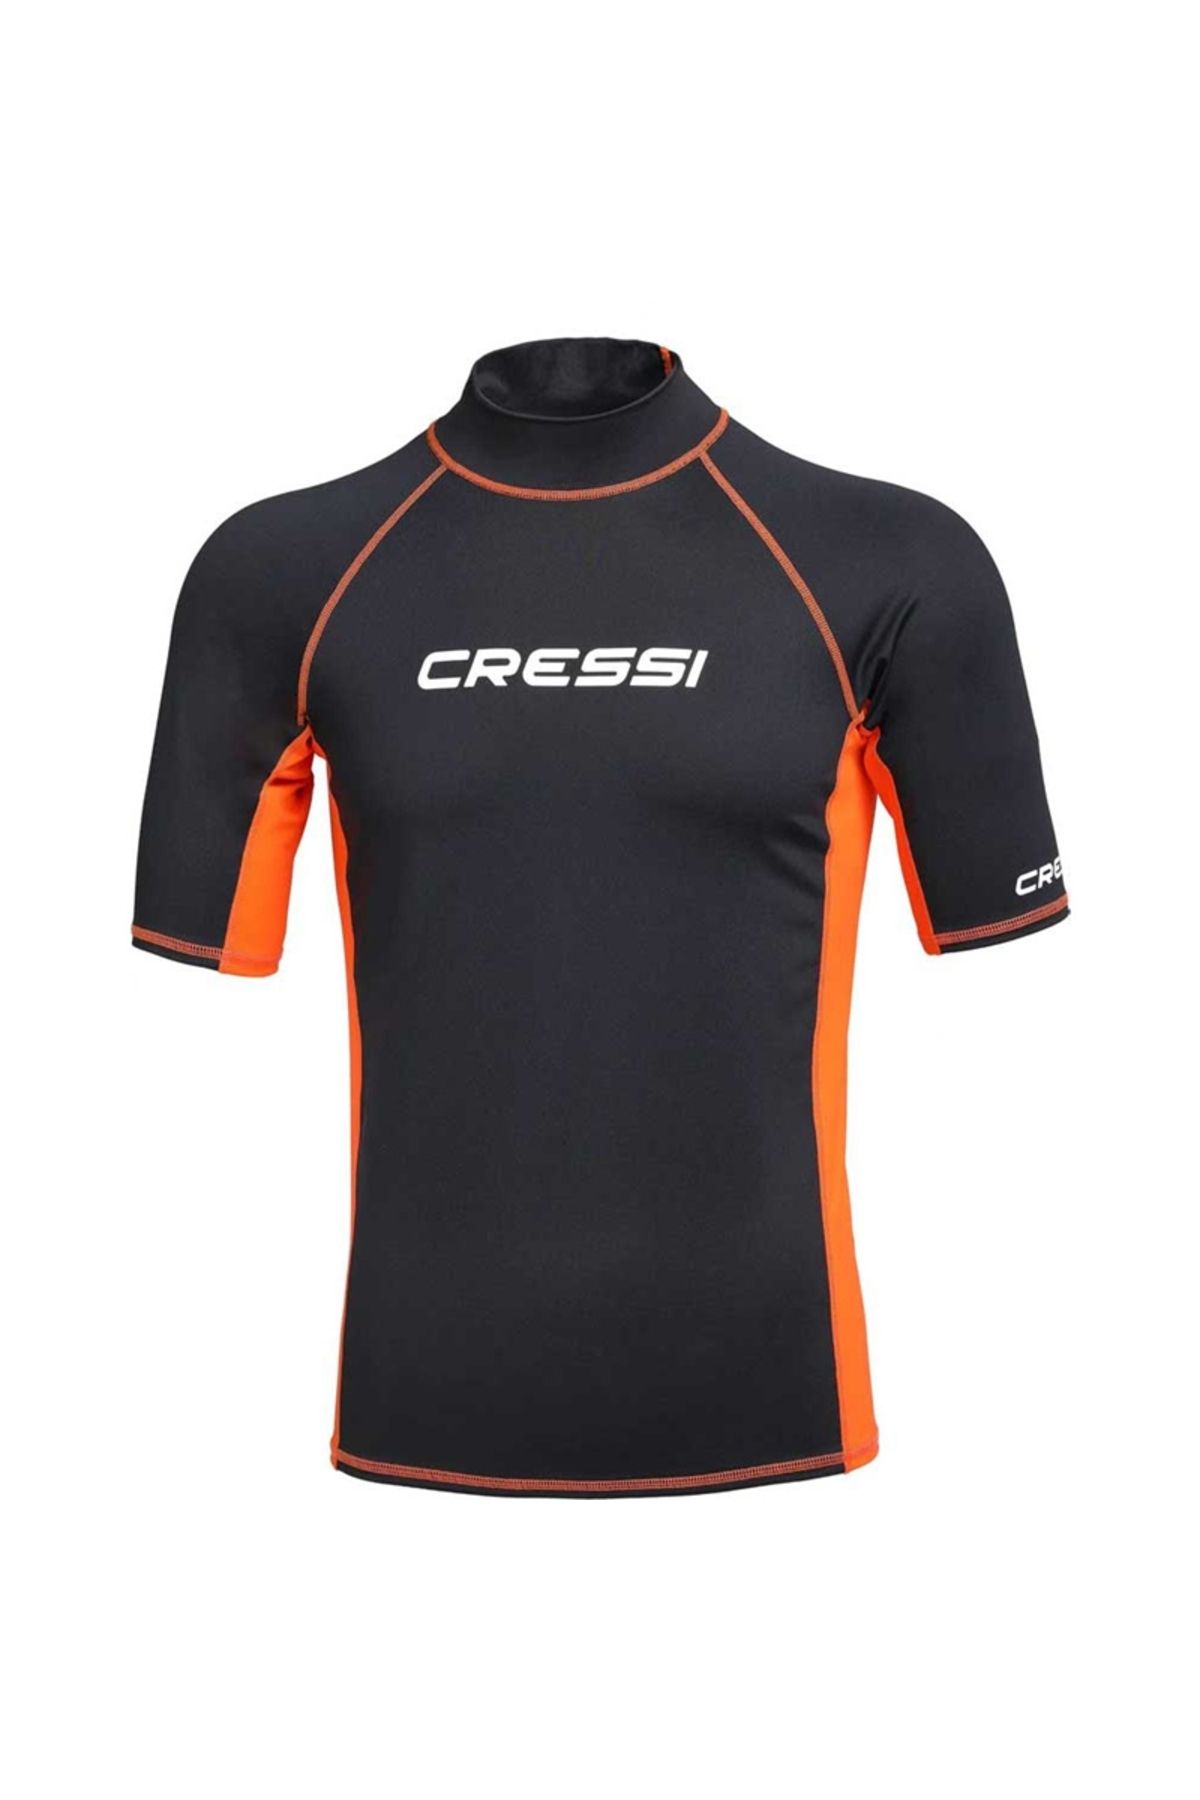 cressi sub Rash Guard Man T-Shirt BLACK - ORANGE-L - NO:4